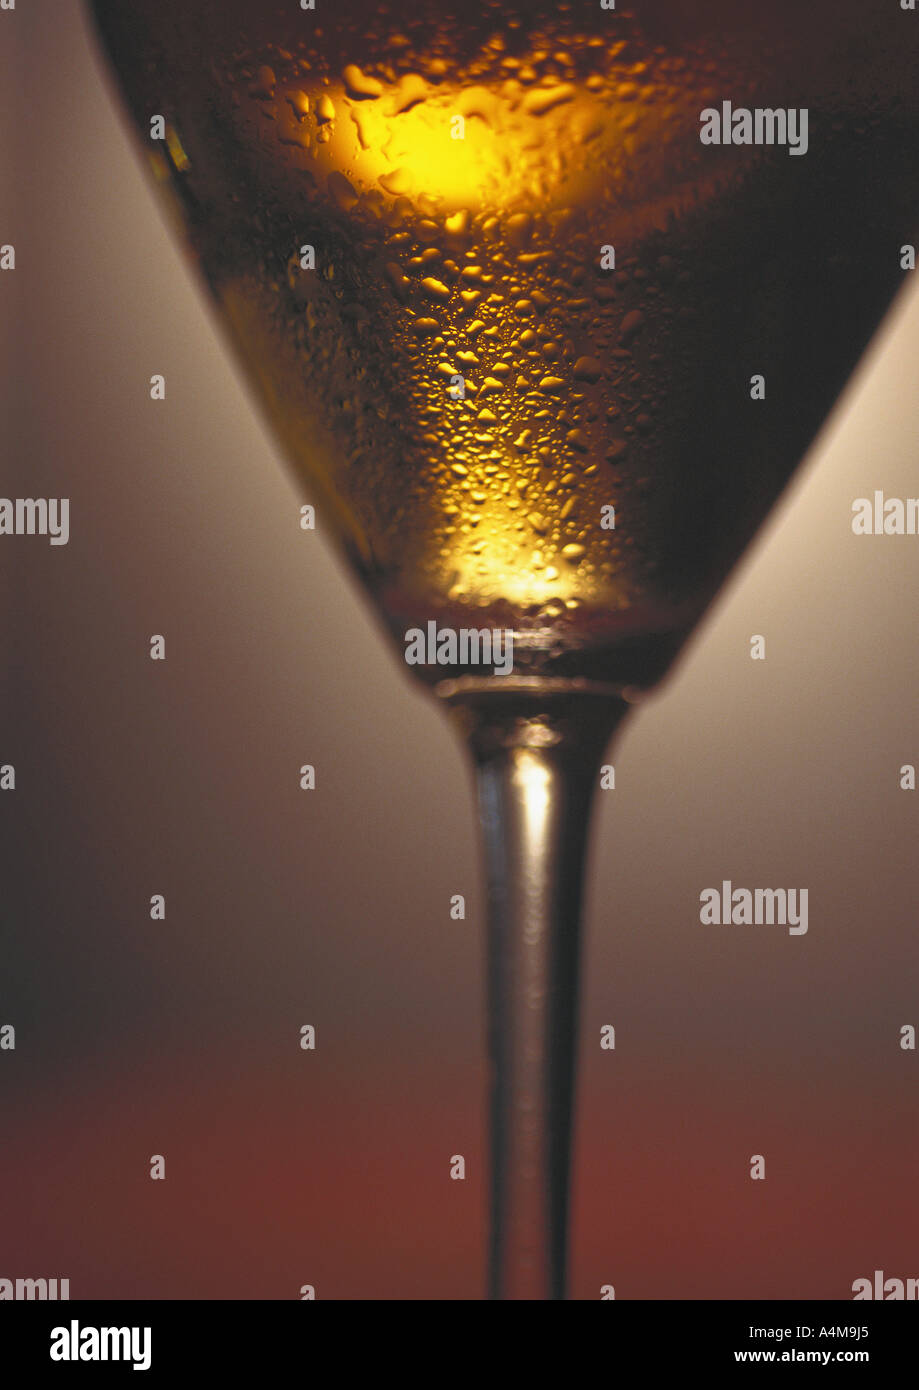 Glass of white wine Stock Photo